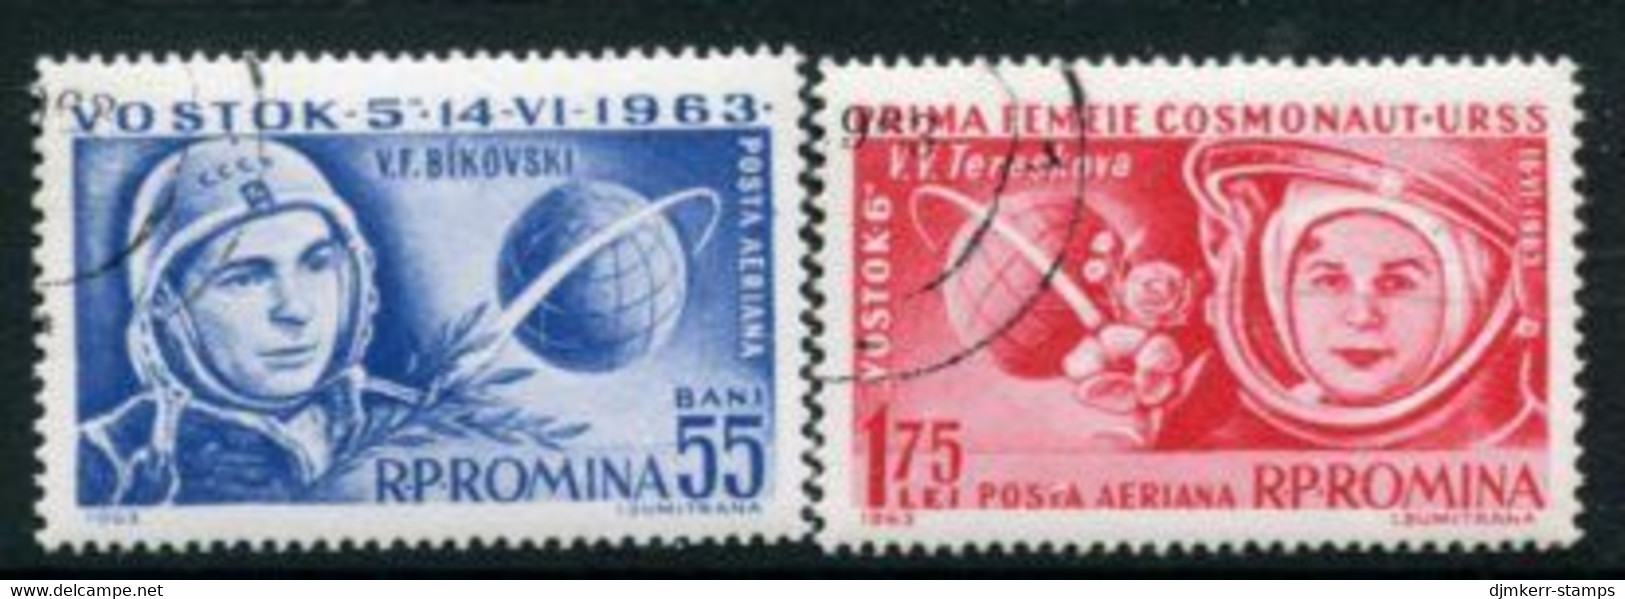 ROMANIA 1963 Vostok 5 And 6 Space Flights Used.  Michel 2171-72 - Oblitérés